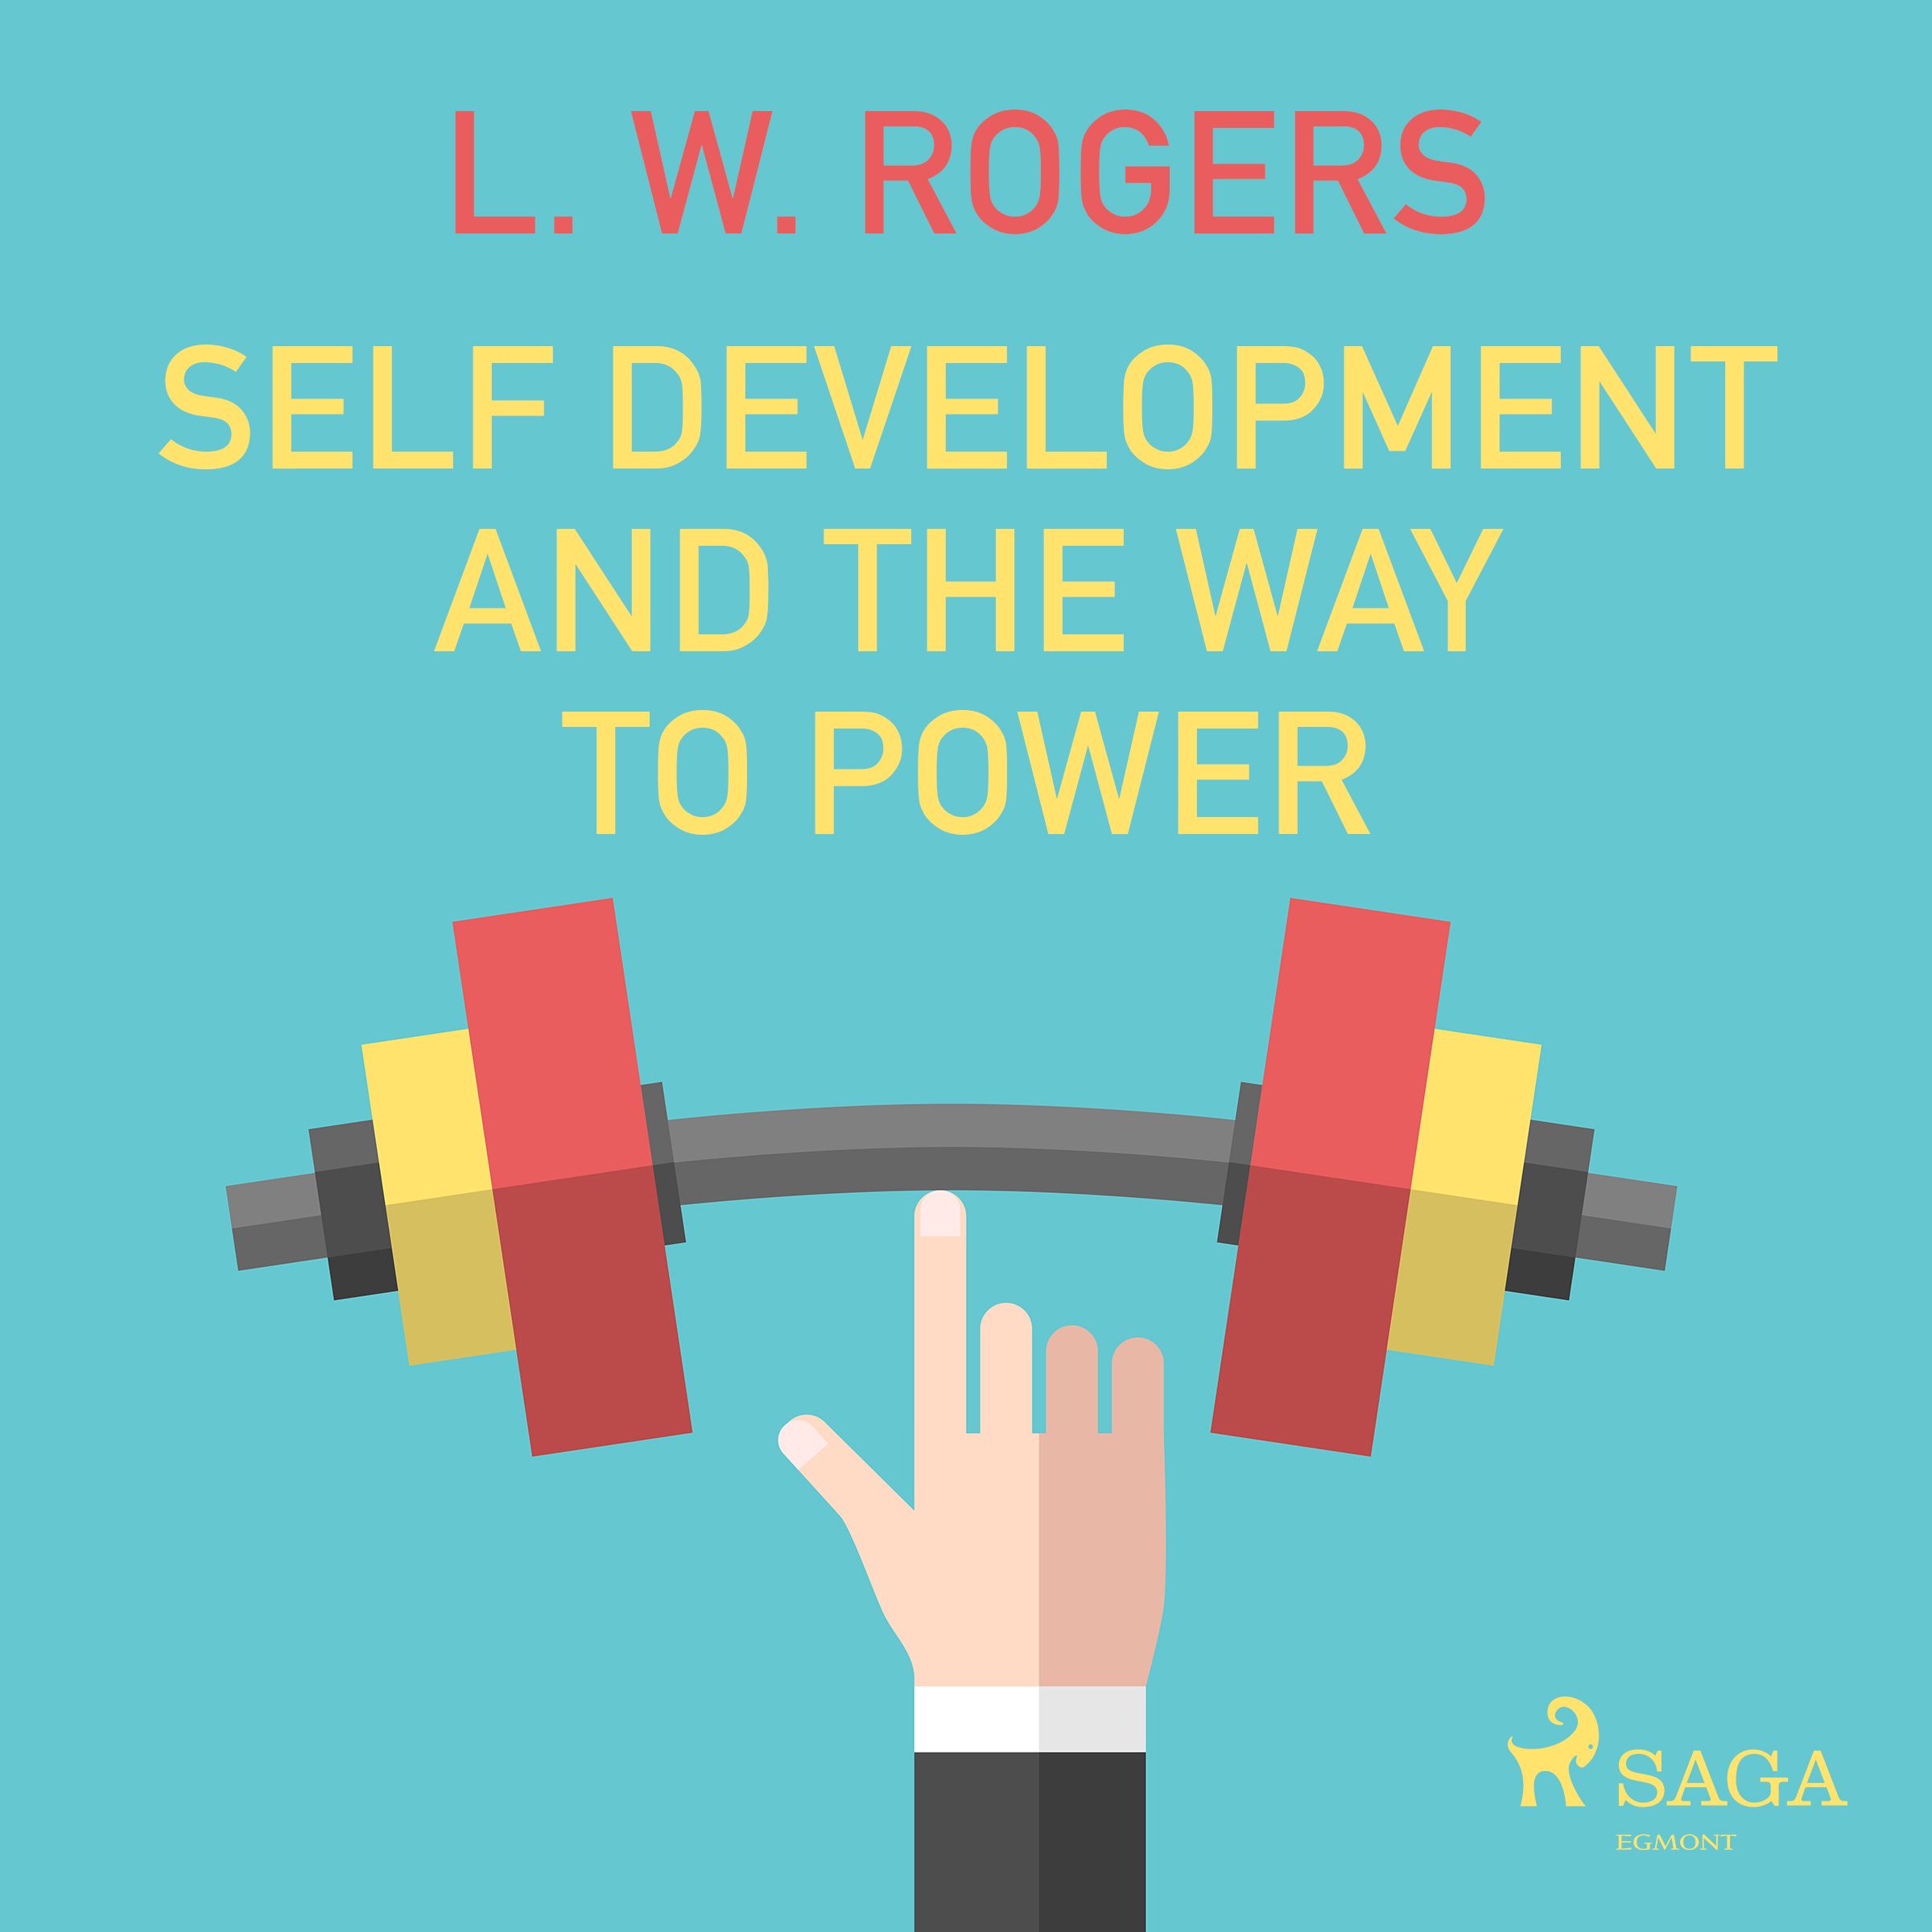 Self Development And The Way to Power, ljudbok av L. W. Rogers